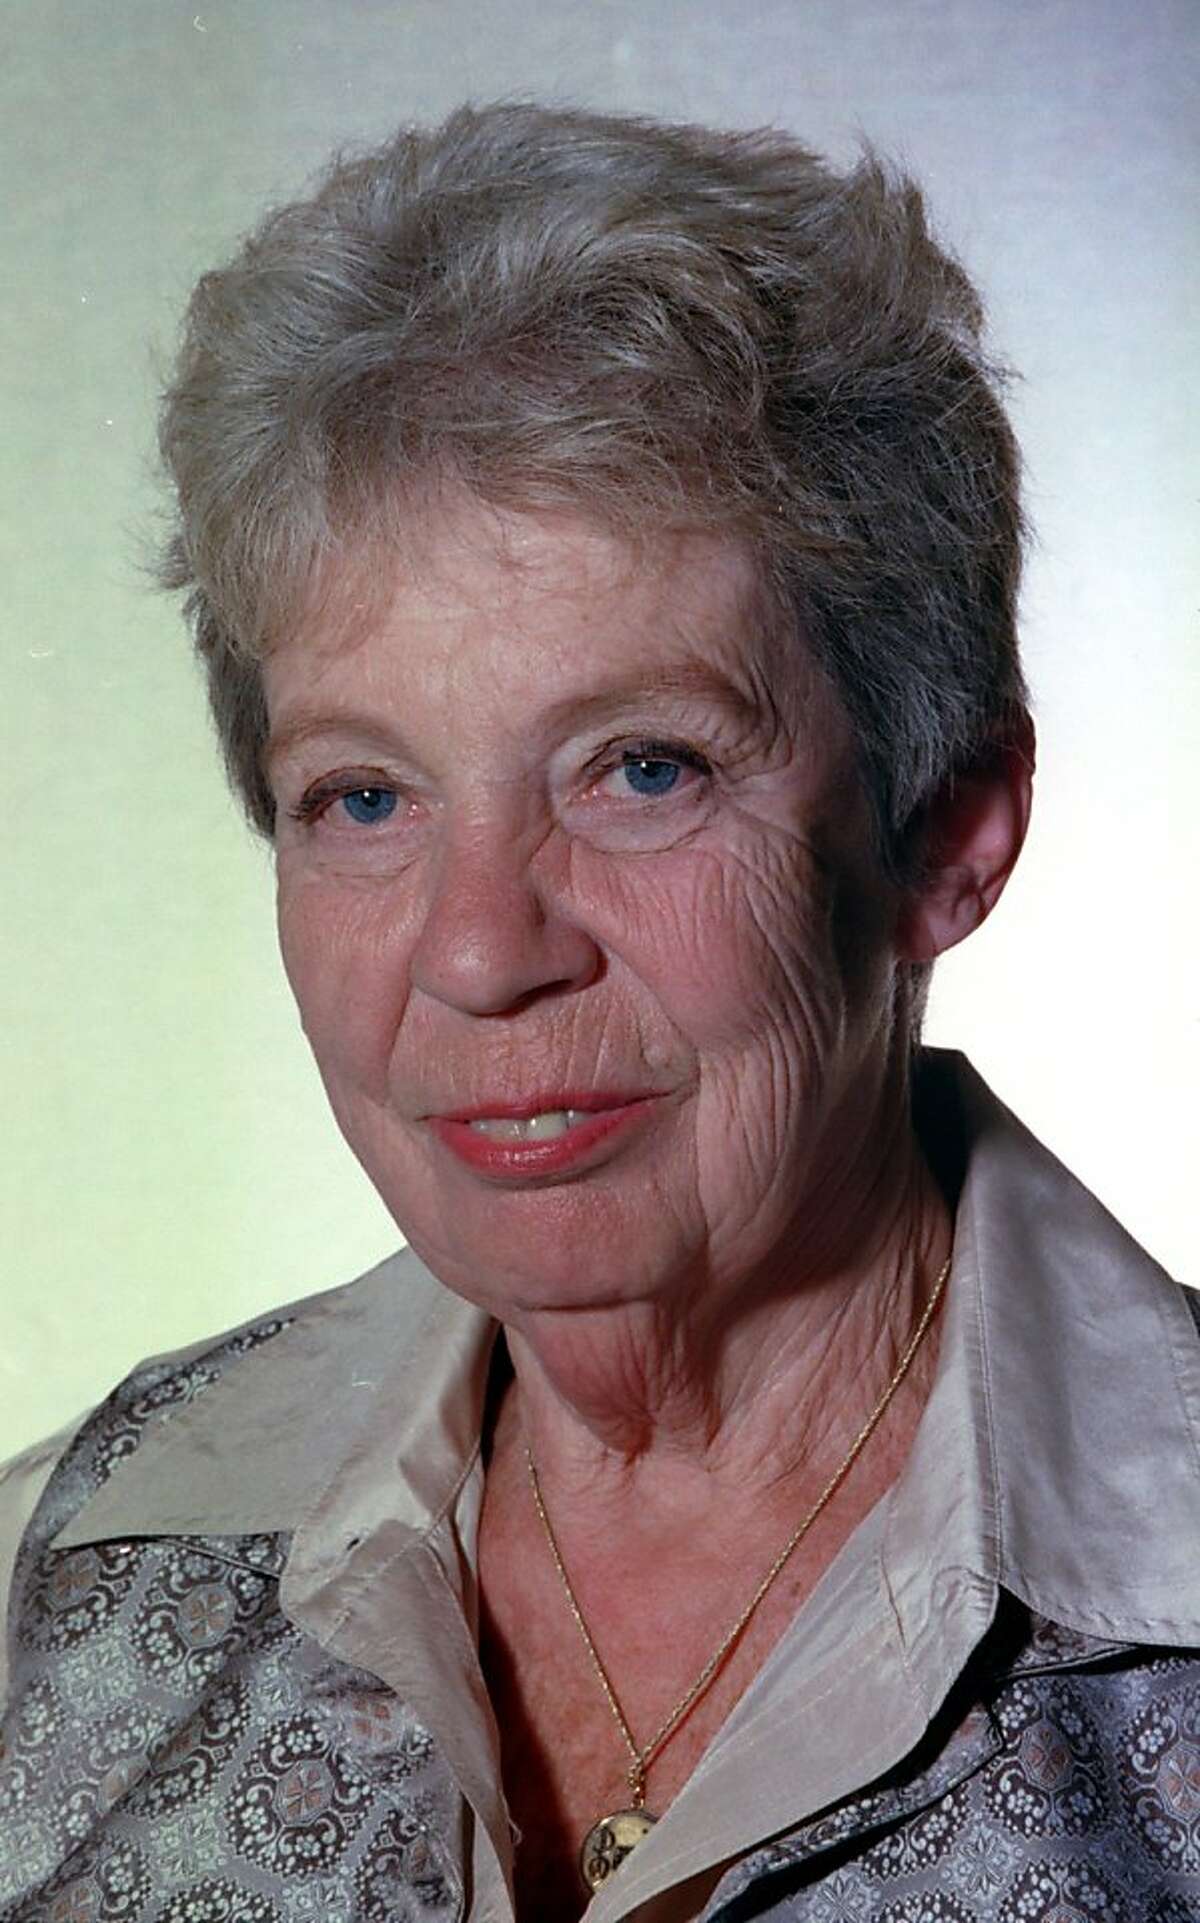 Karola Saekel was a respected Chronicle food writer.